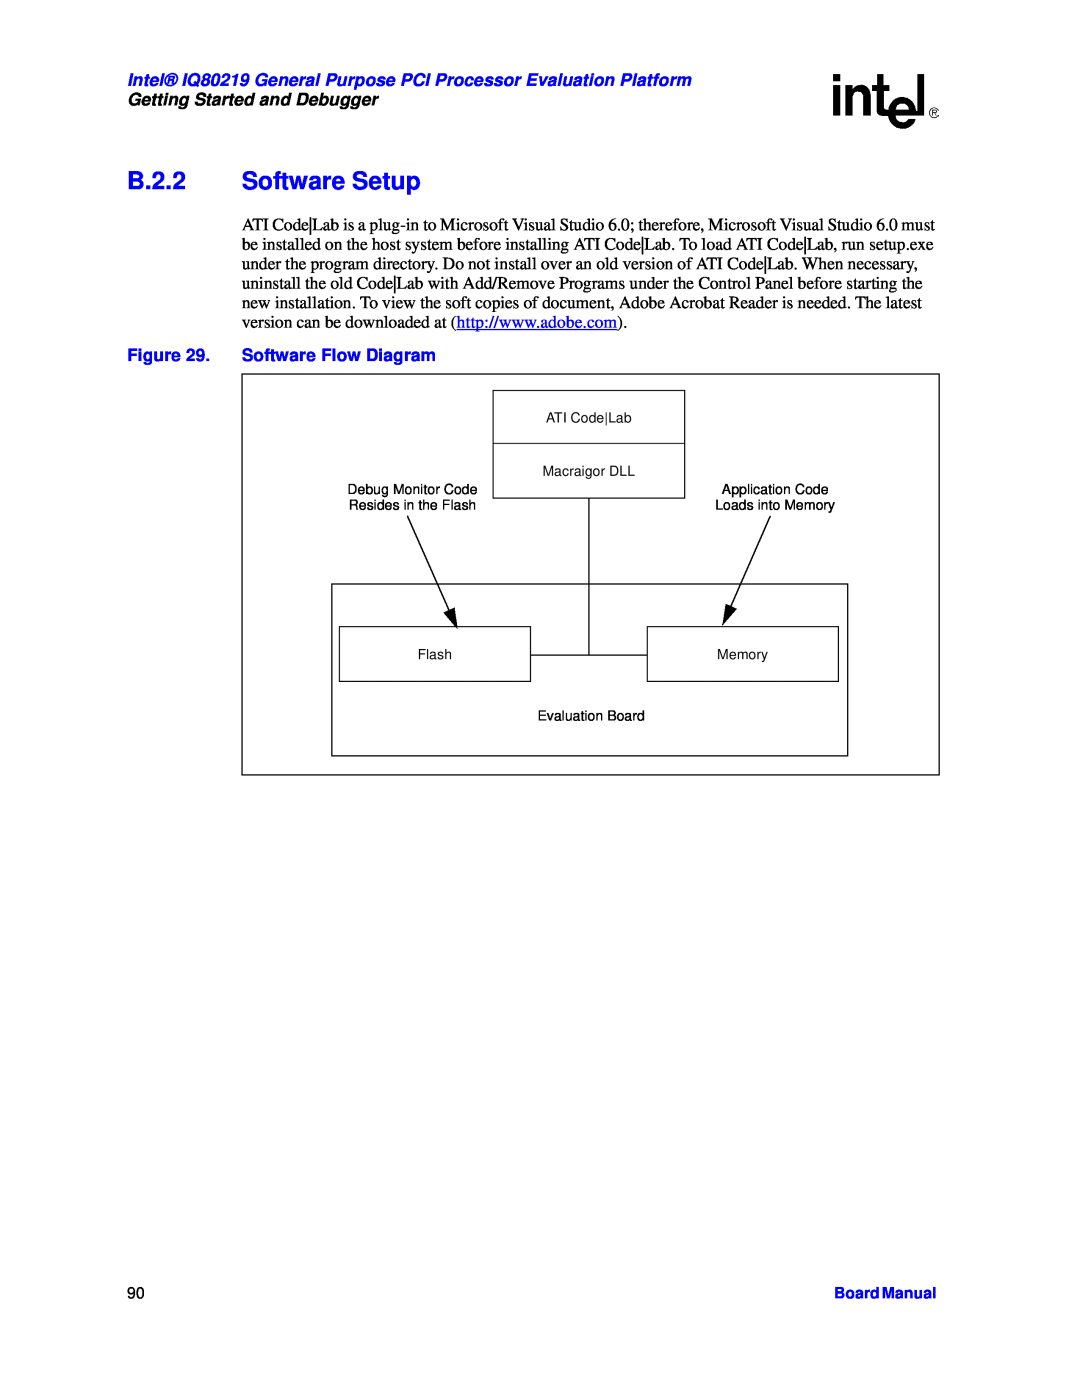 Intel B.2.2 Software Setup, Software Flow Diagram, Intel IQ80219 General Purpose PCI Processor Evaluation Platform 